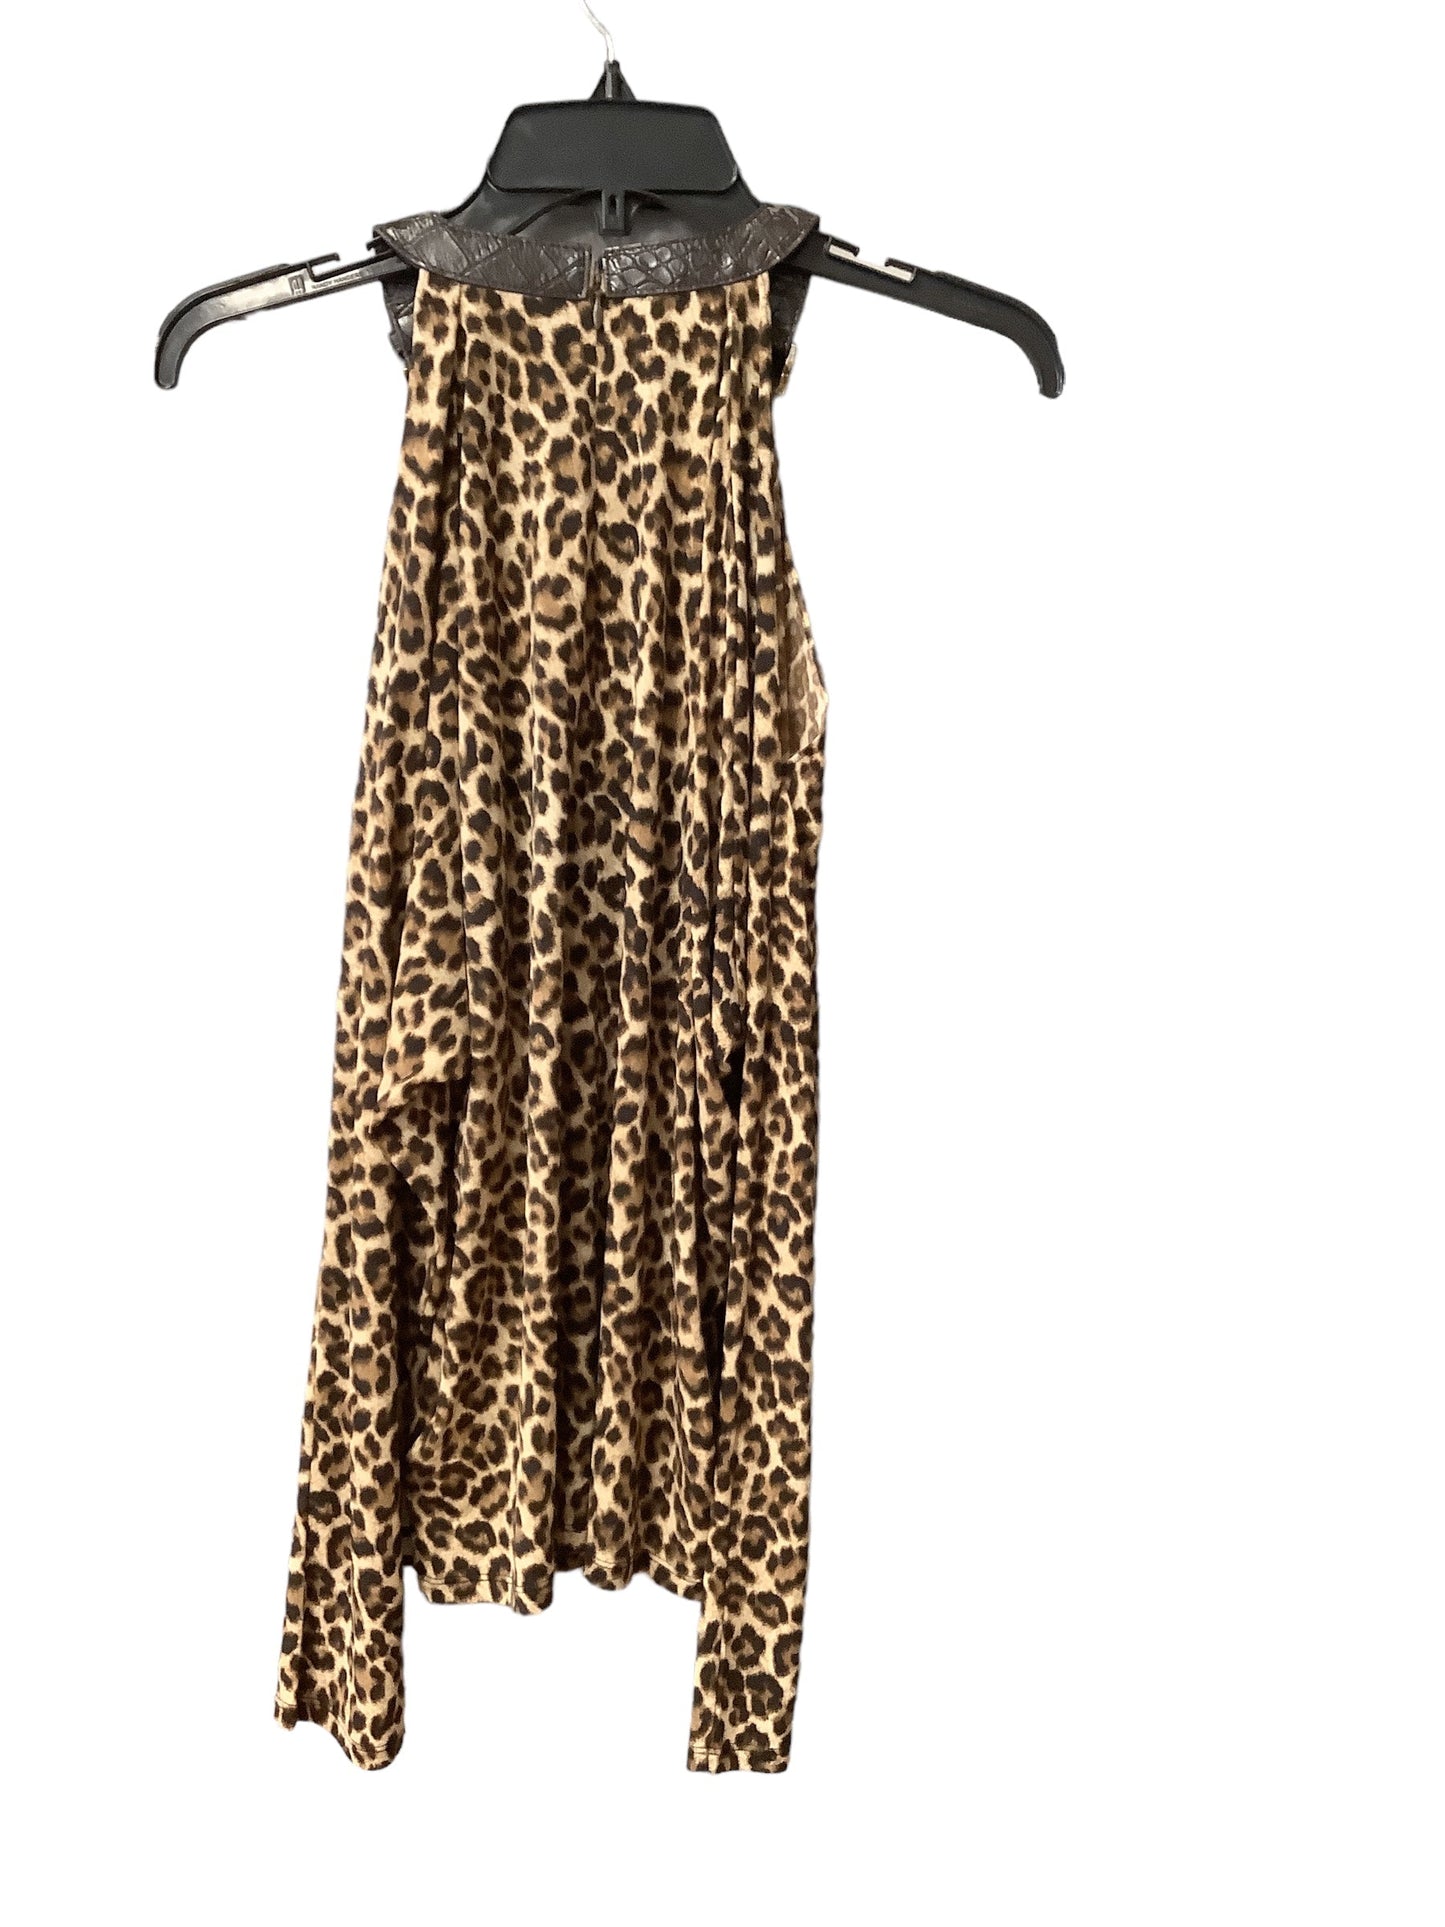 Leopard Print Top Long Sleeve Designer Michael By Michael Kors, Size S